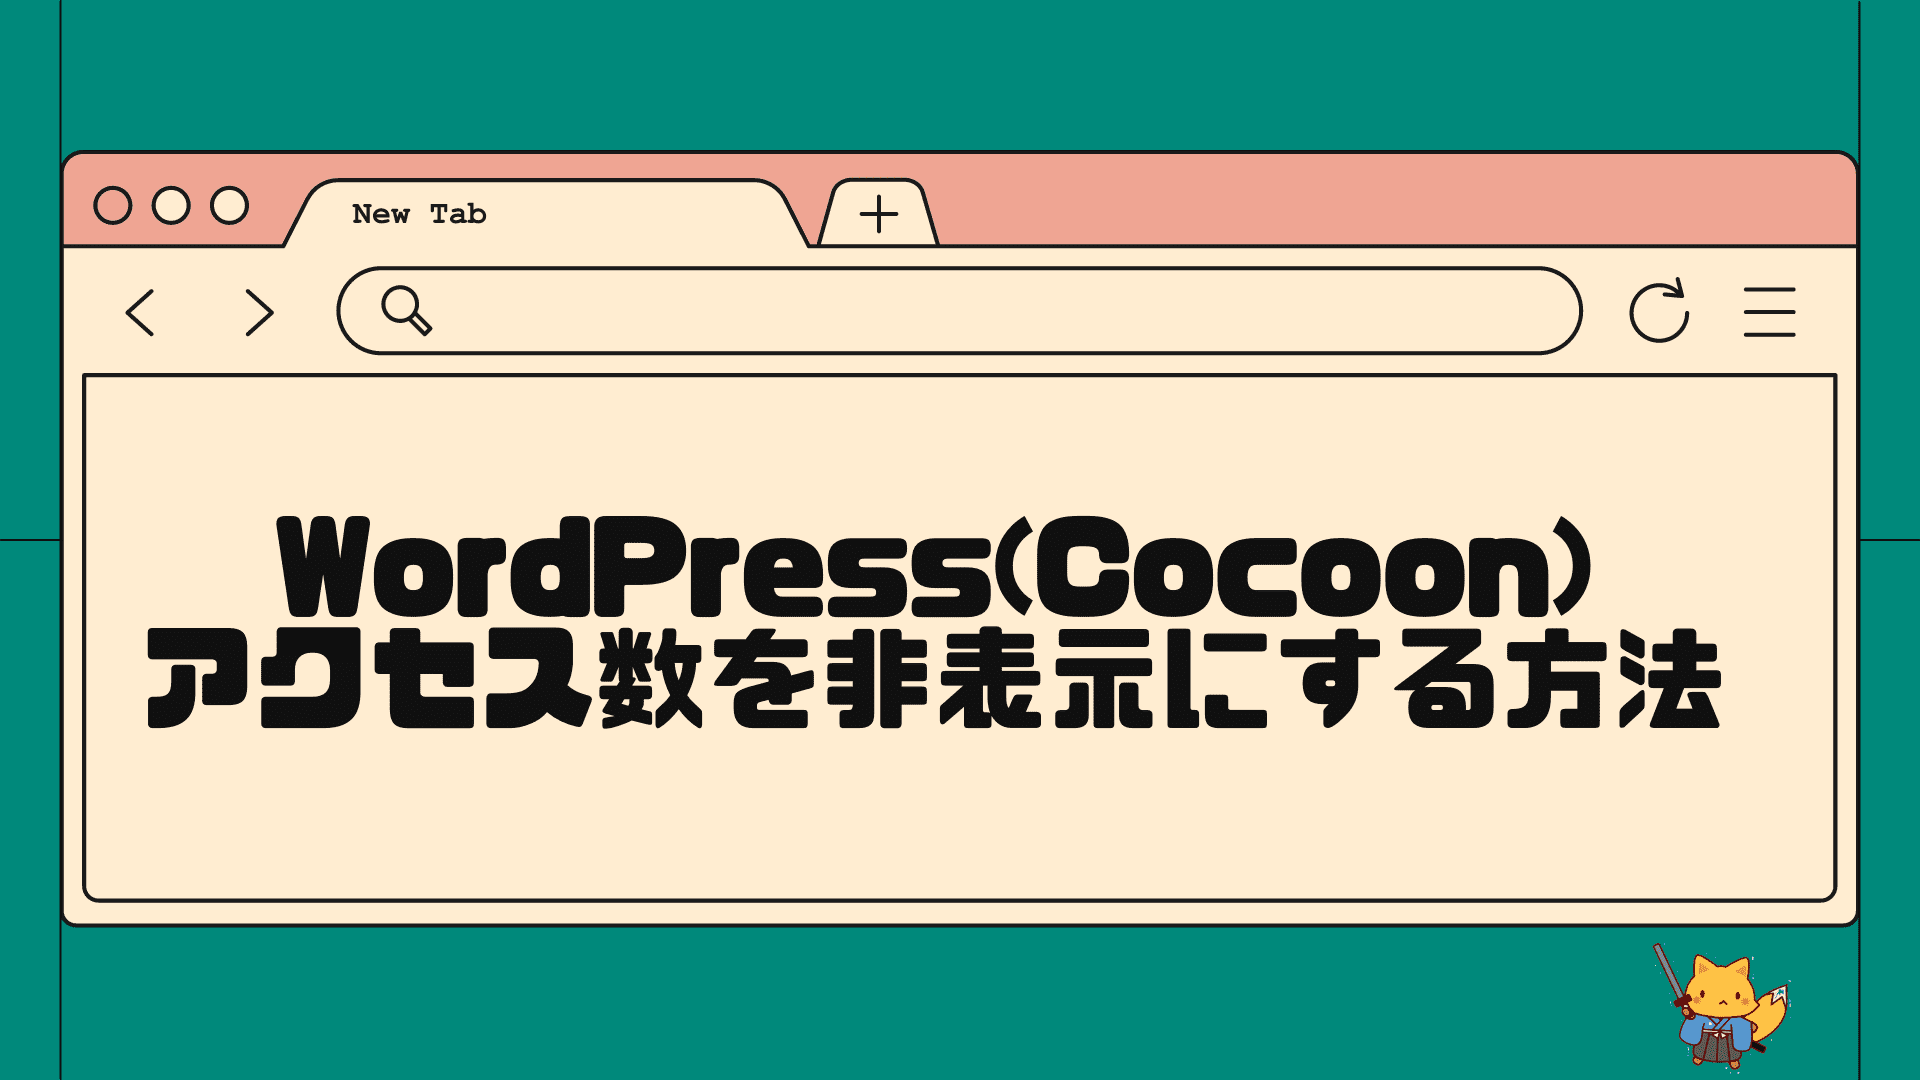 wordpress(cocoon)でアクセス数を非表示にする方法